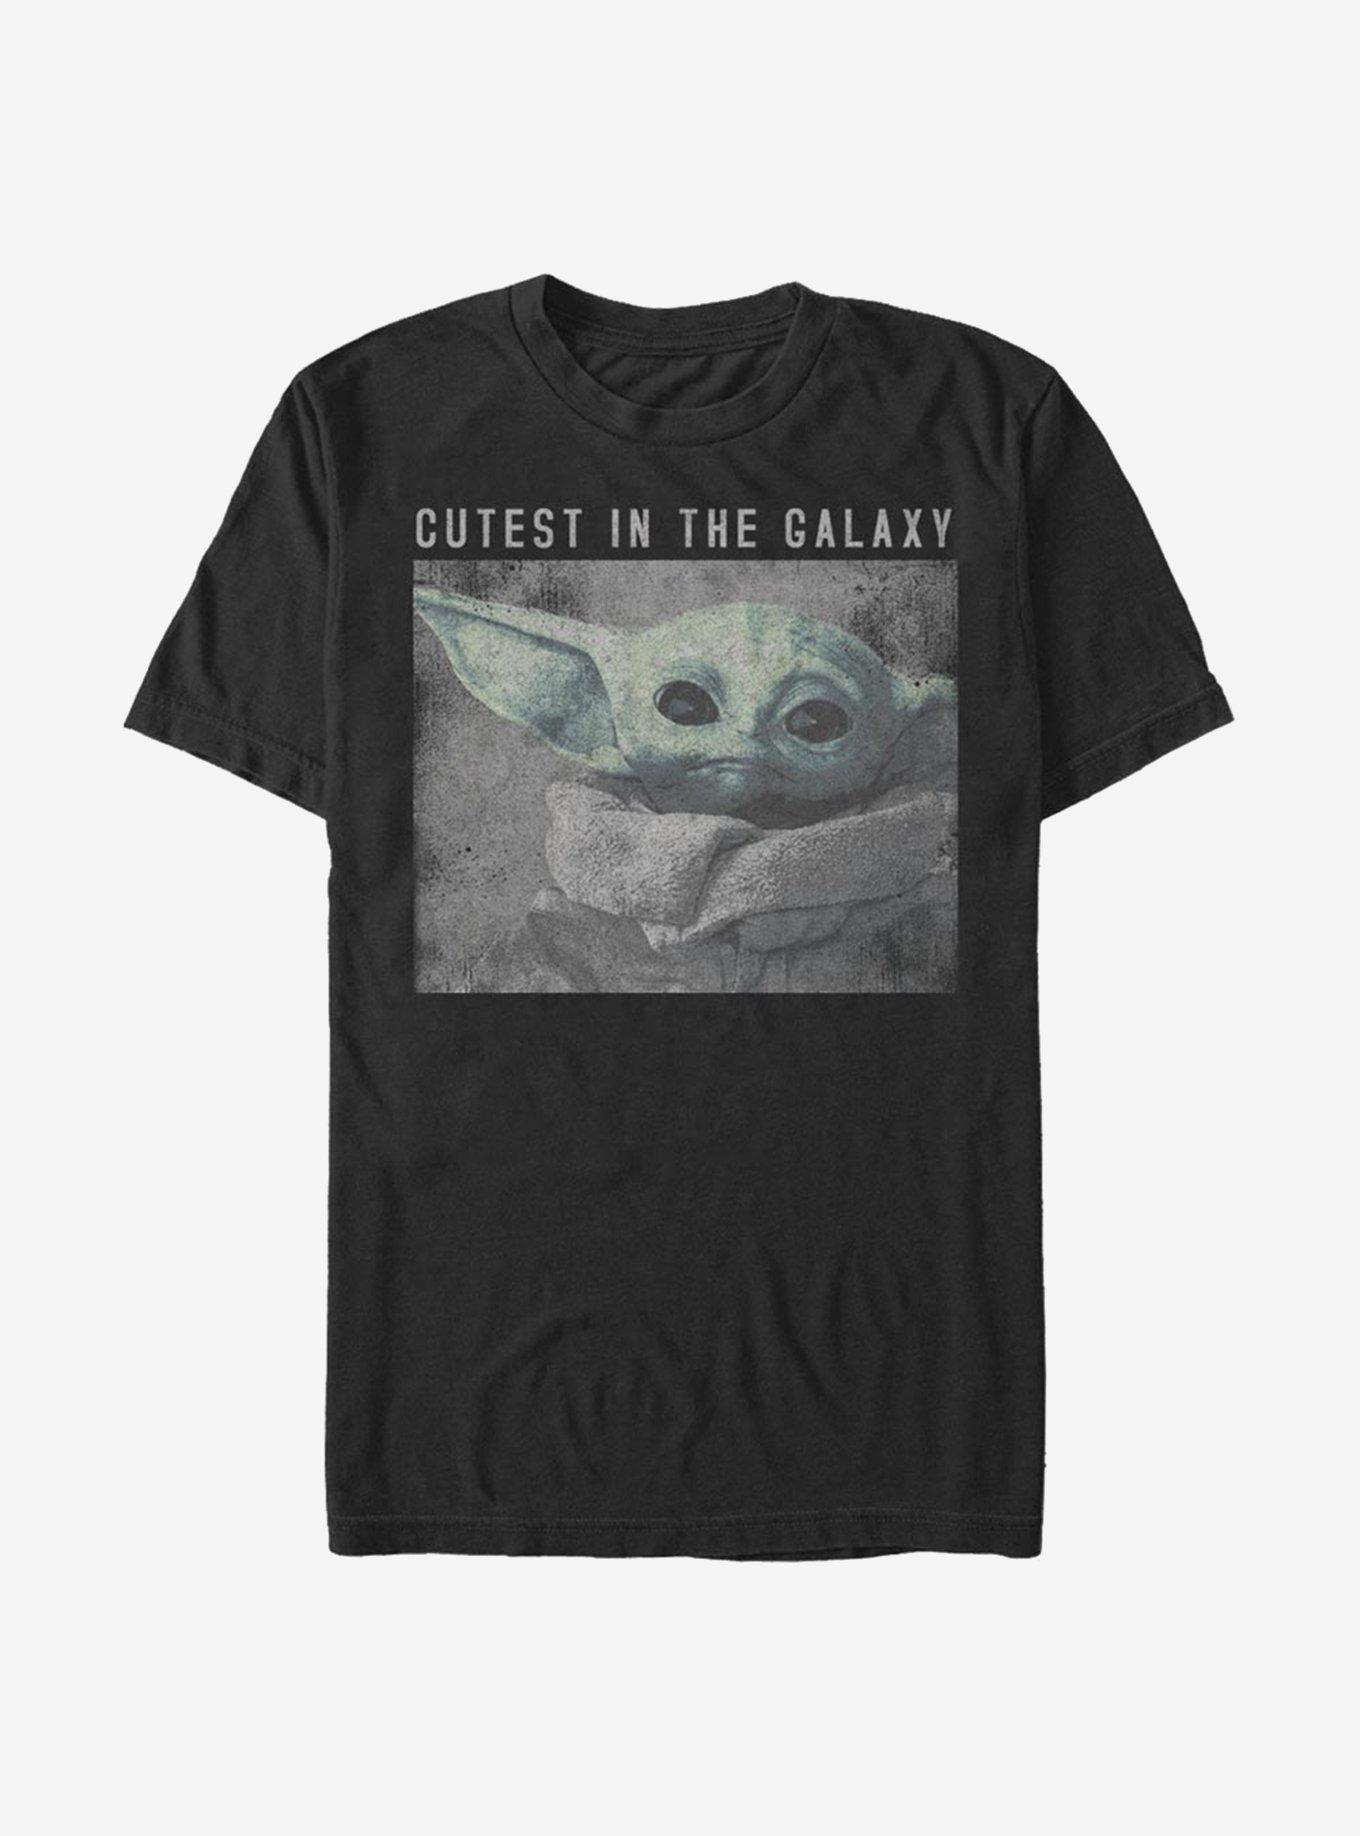 Star Wars The Mandalorian Child Galaxy's Cutest T-Shirt